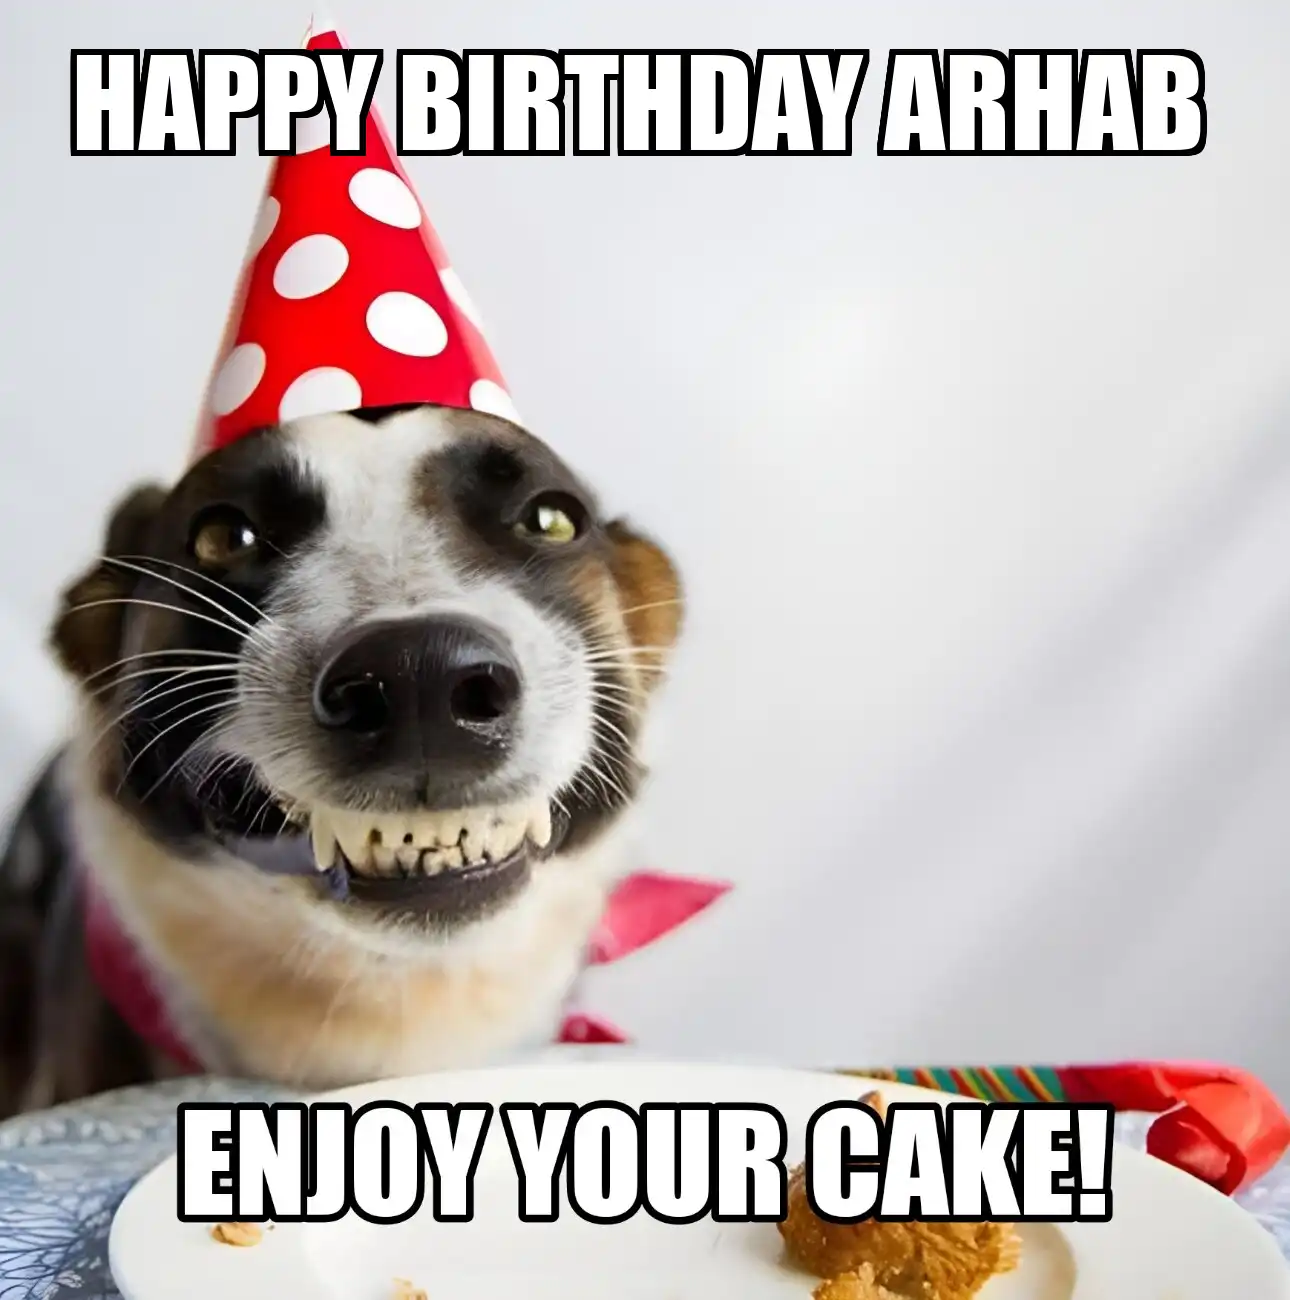 Happy Birthday Arhab Enjoy Your Cake Dog Meme